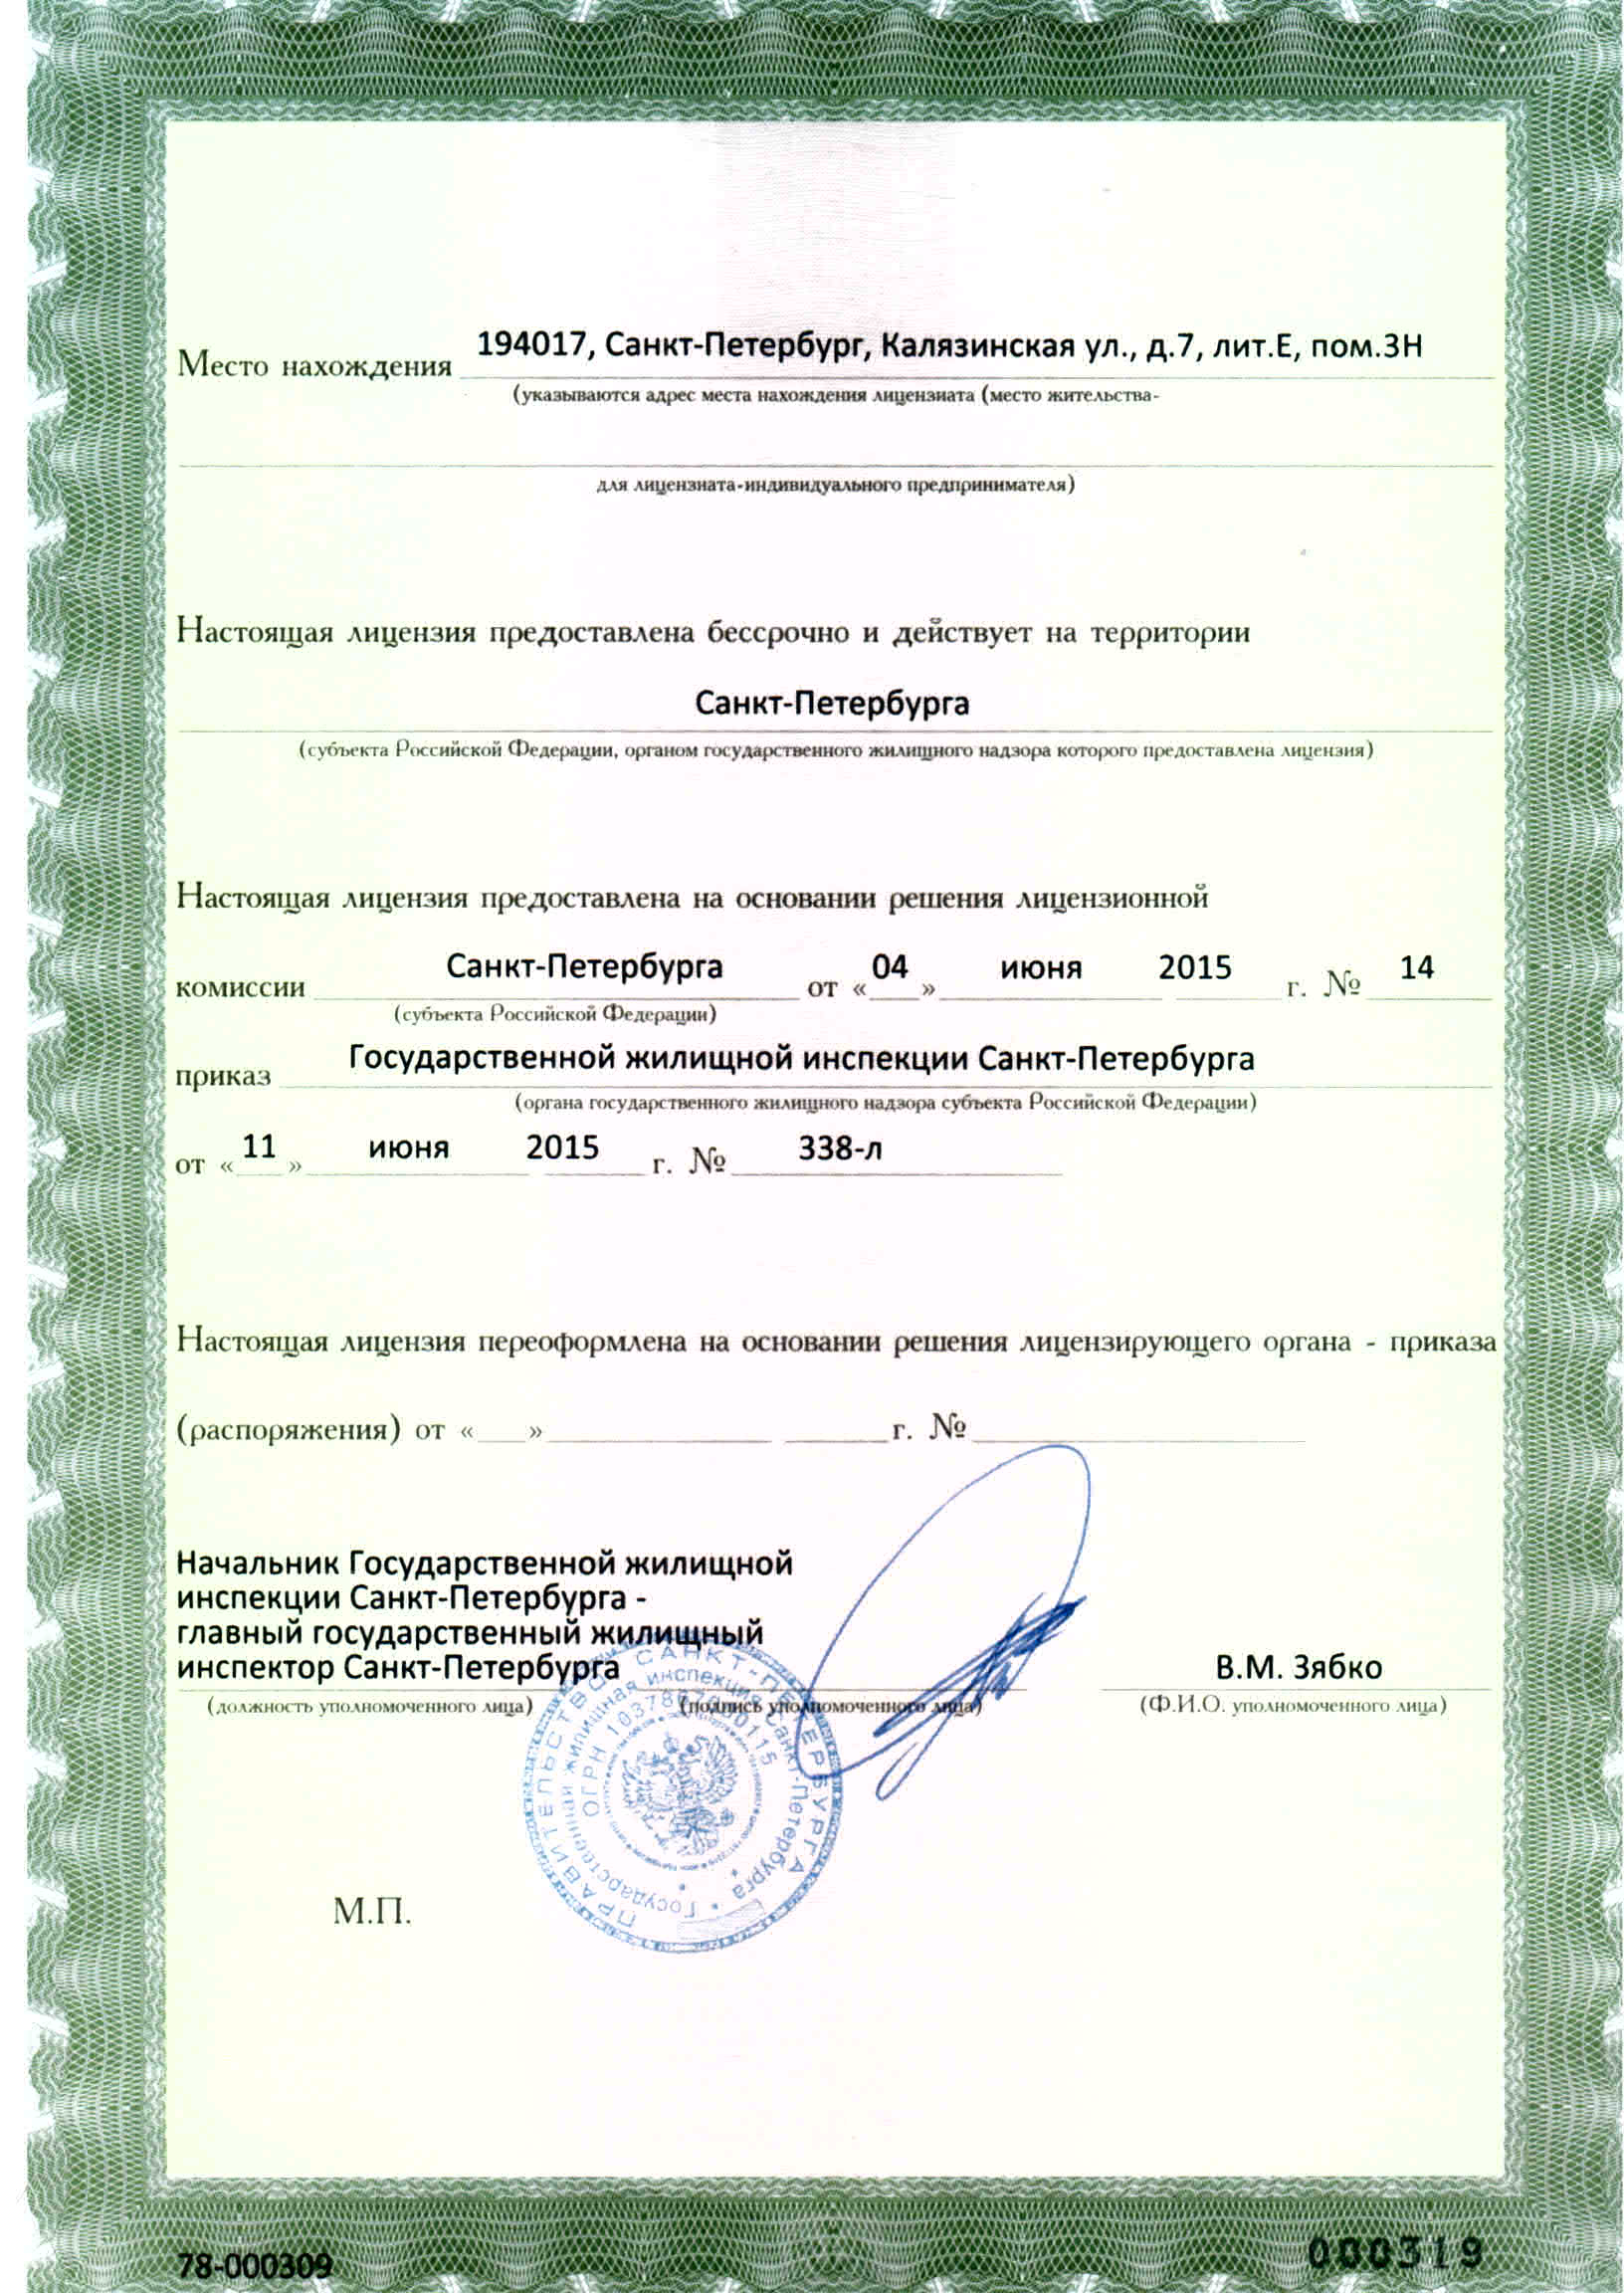 Лицензия на управление МКД №78-000309 от 11.06.2015